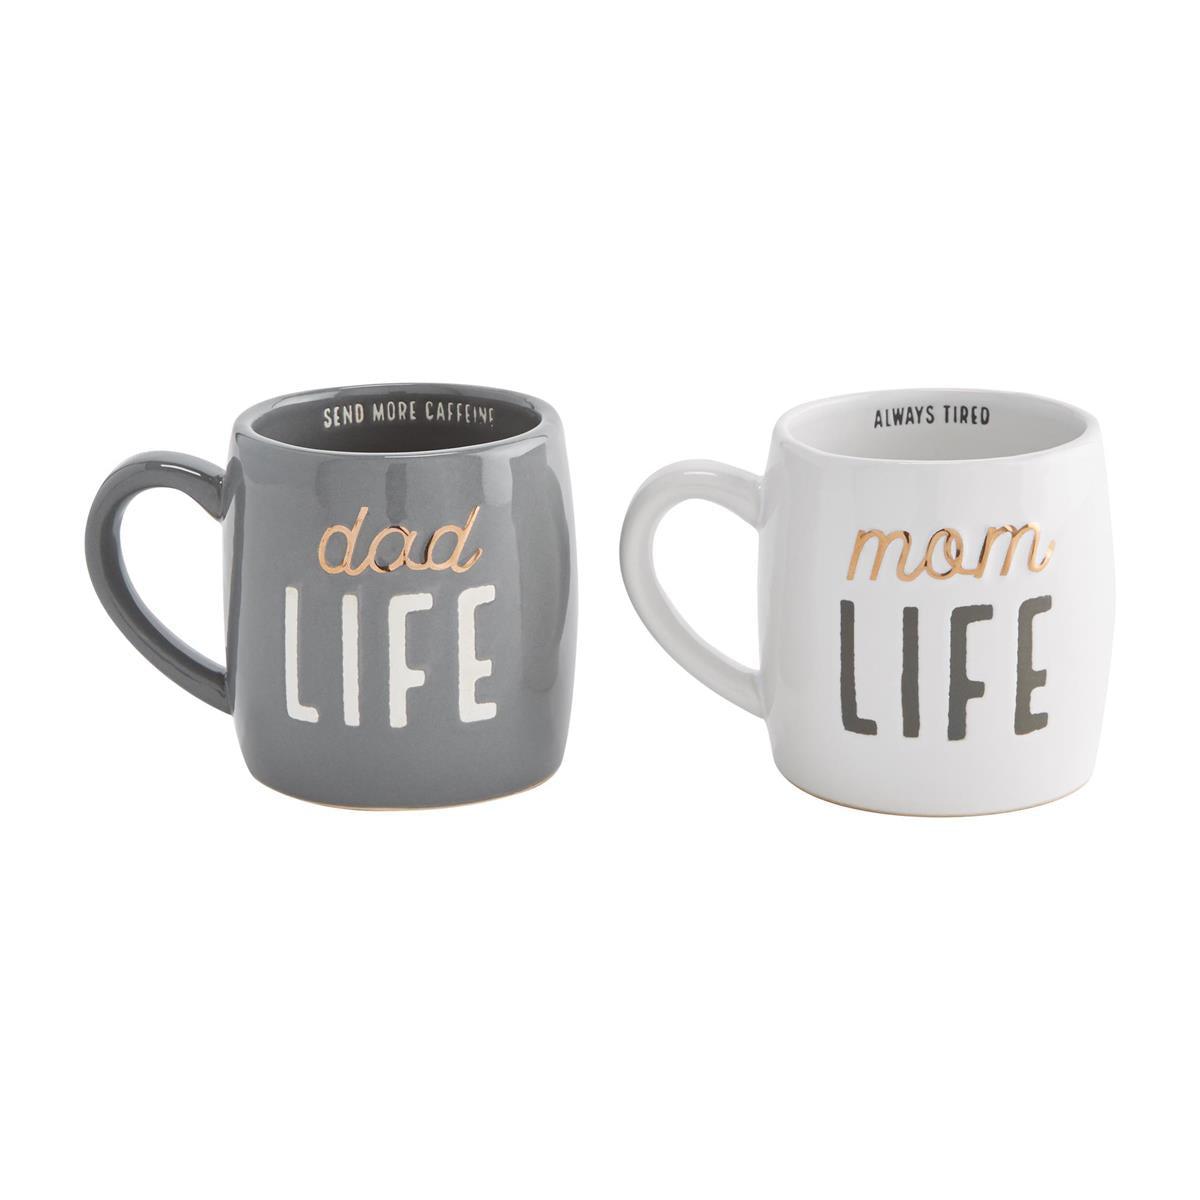 Dad Life & Mom Life Mugs